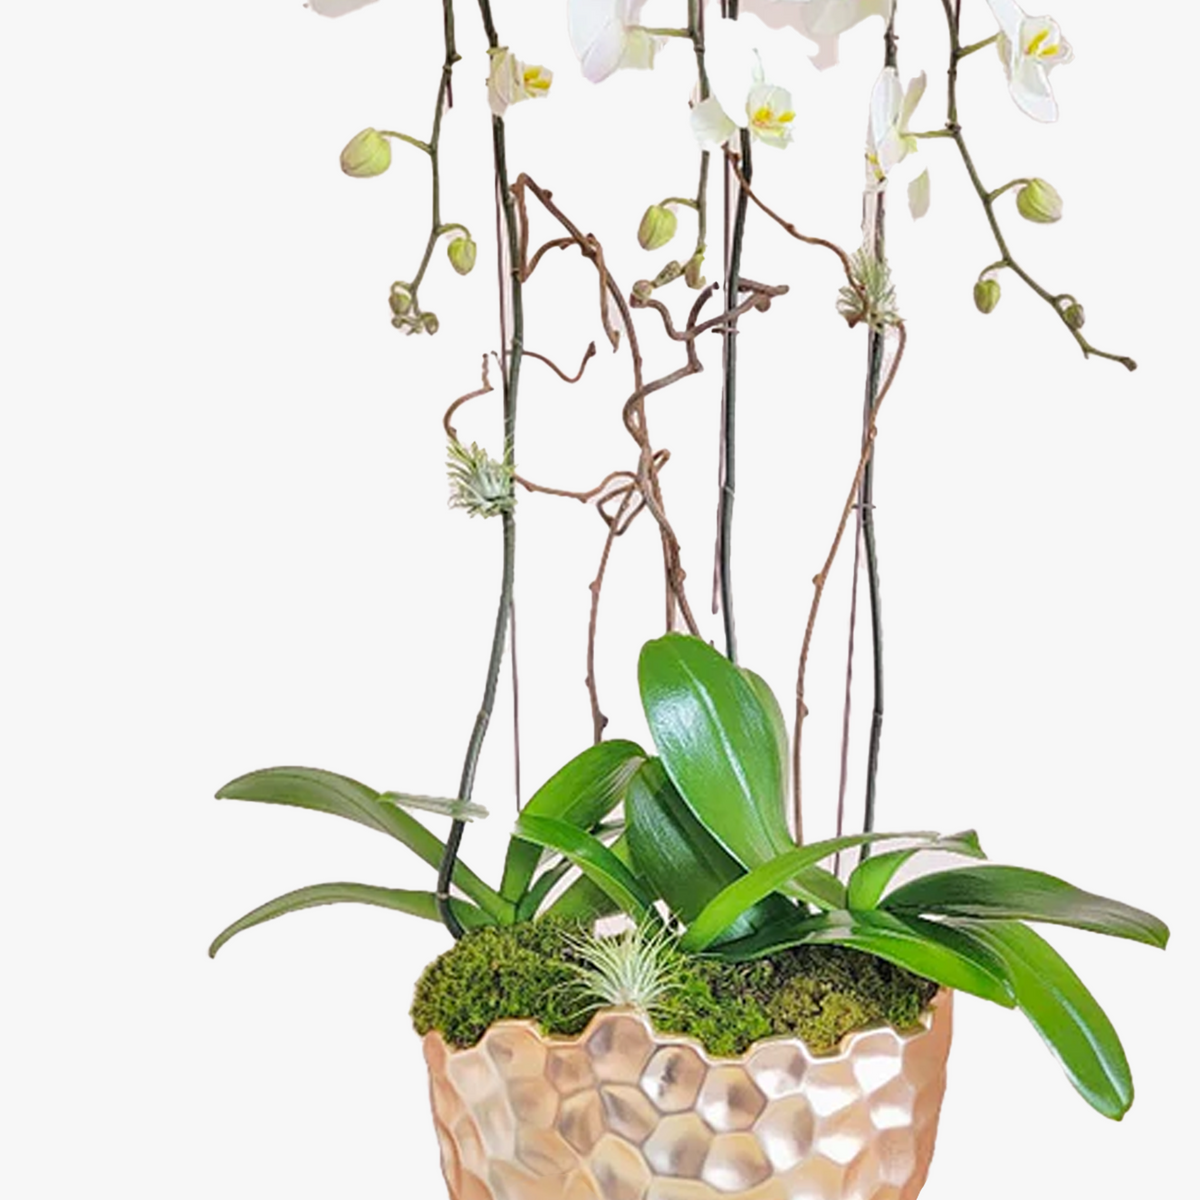 Celestial White Orchids